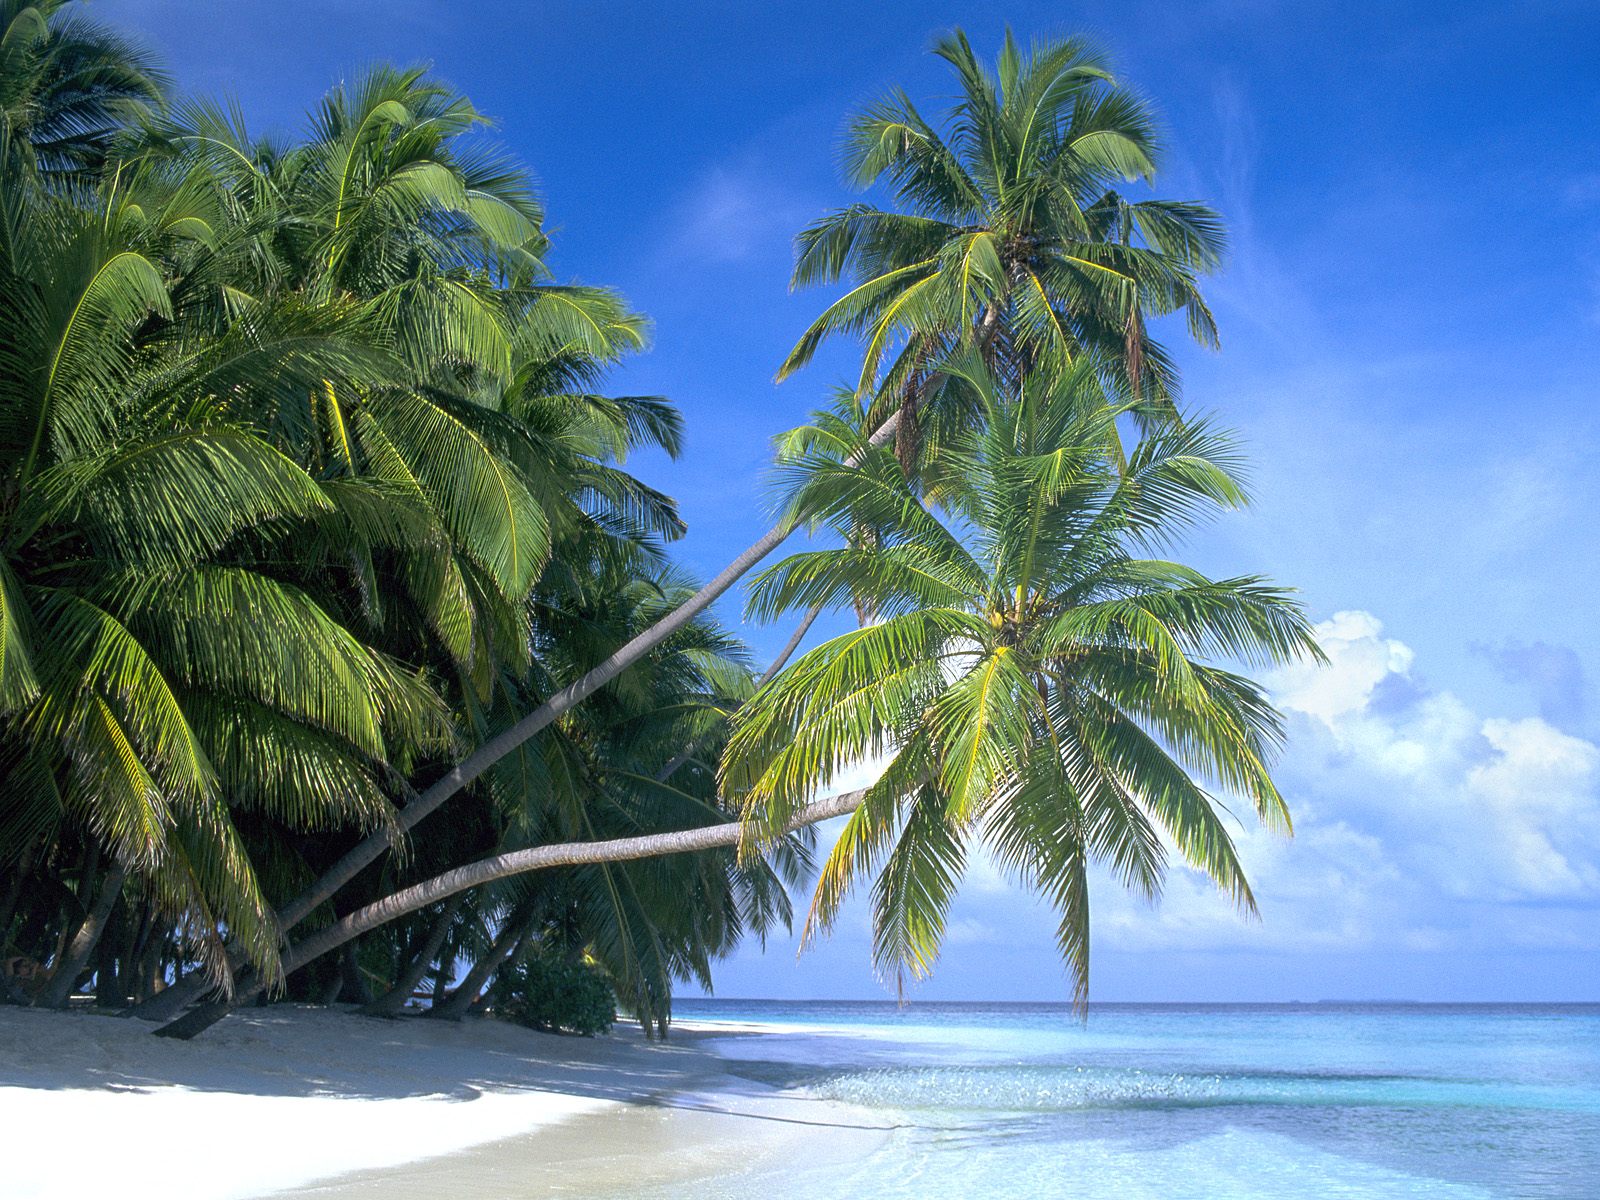 Maldive Islands - Travel Guide and Travel Info ~ Tourist Destinations